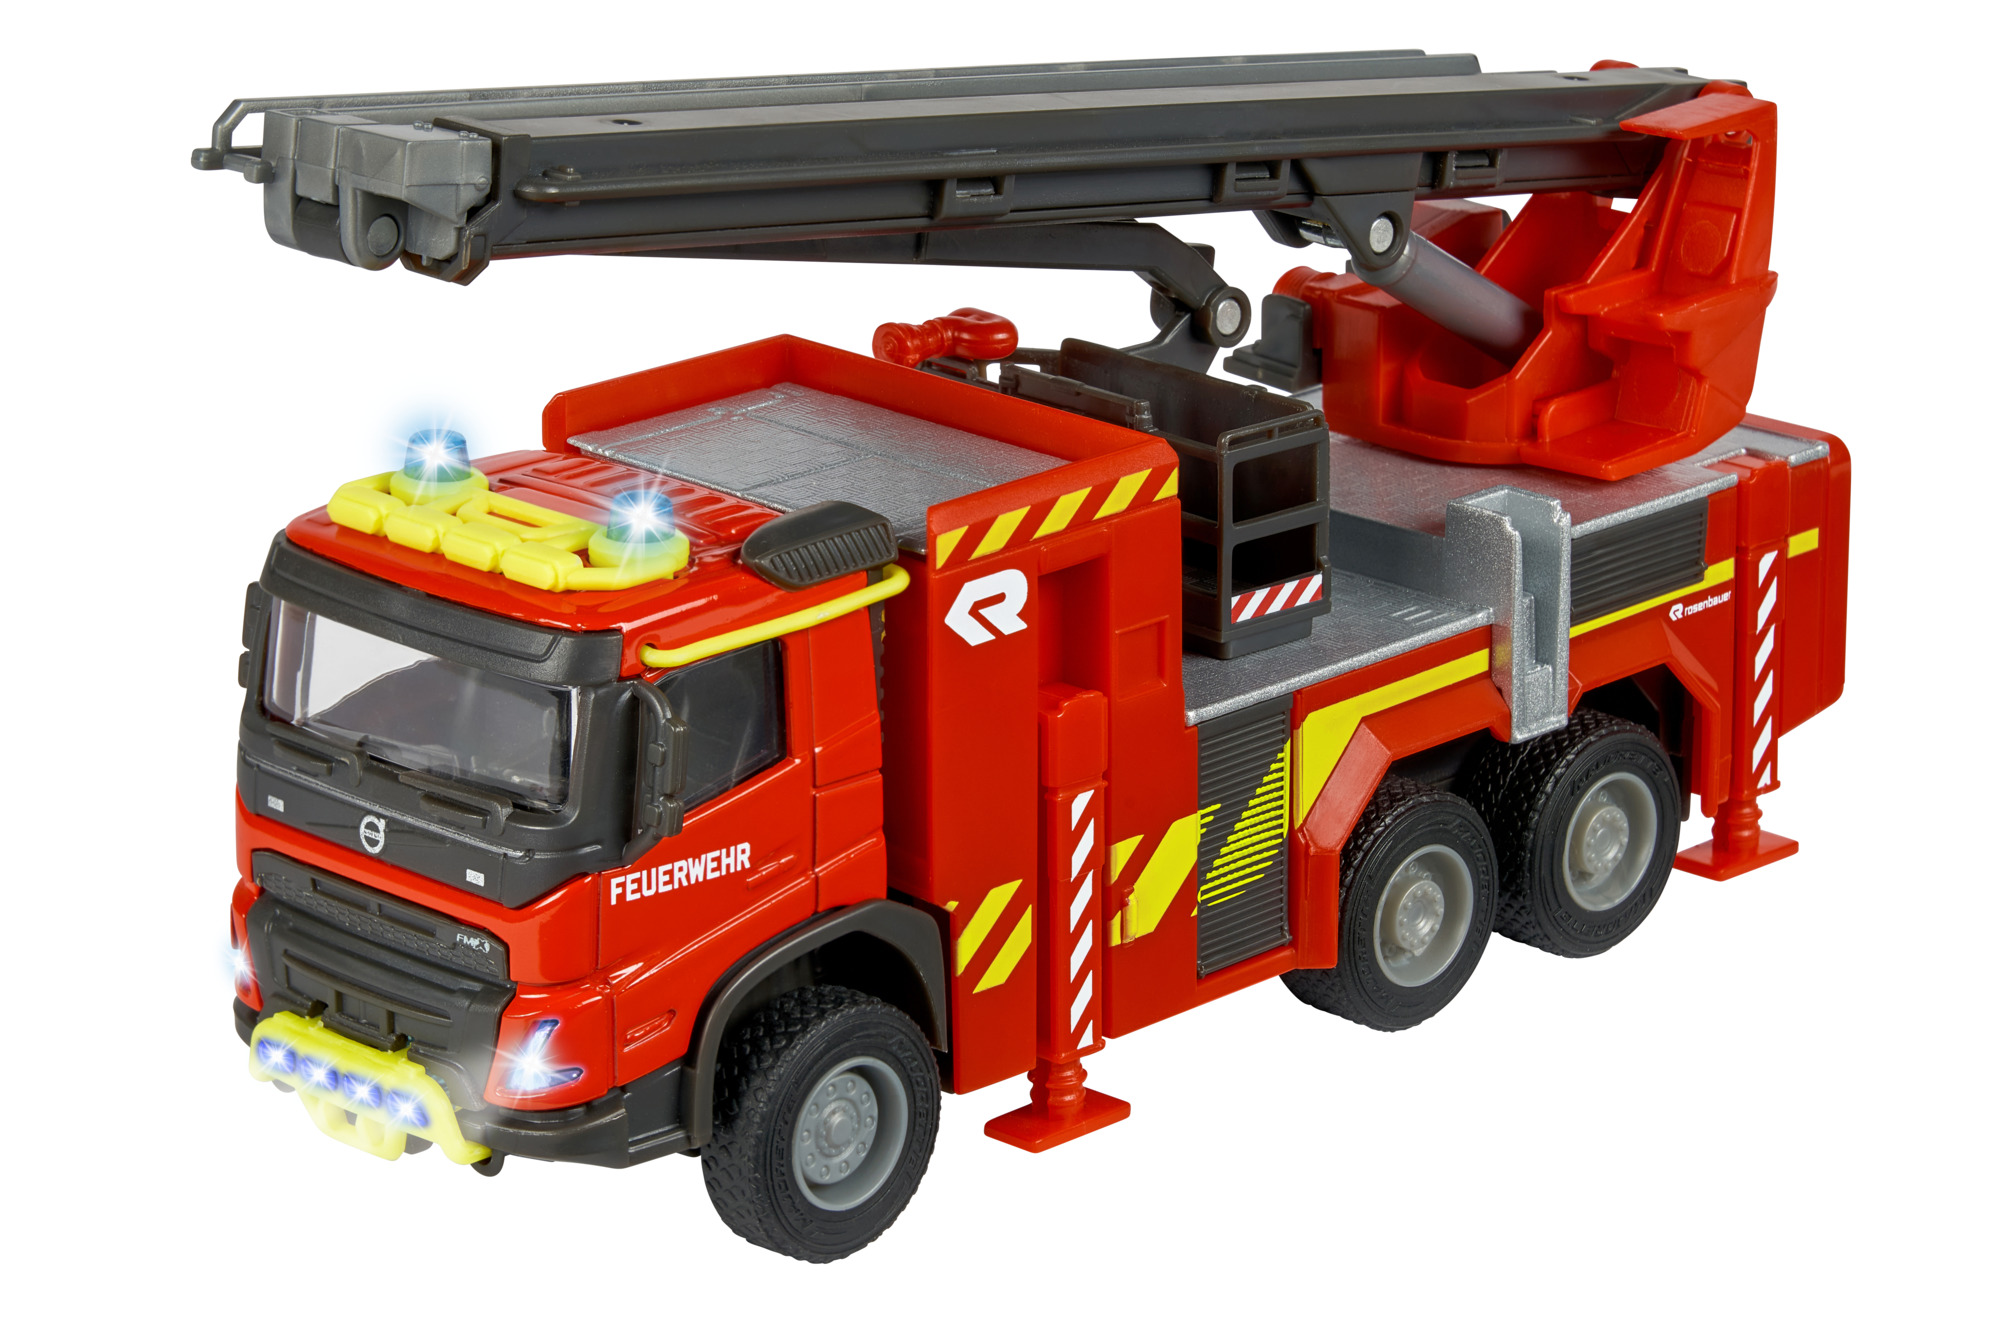 Rot Volvo Truck MAJORETTE Spielzeugauto Fire Engine